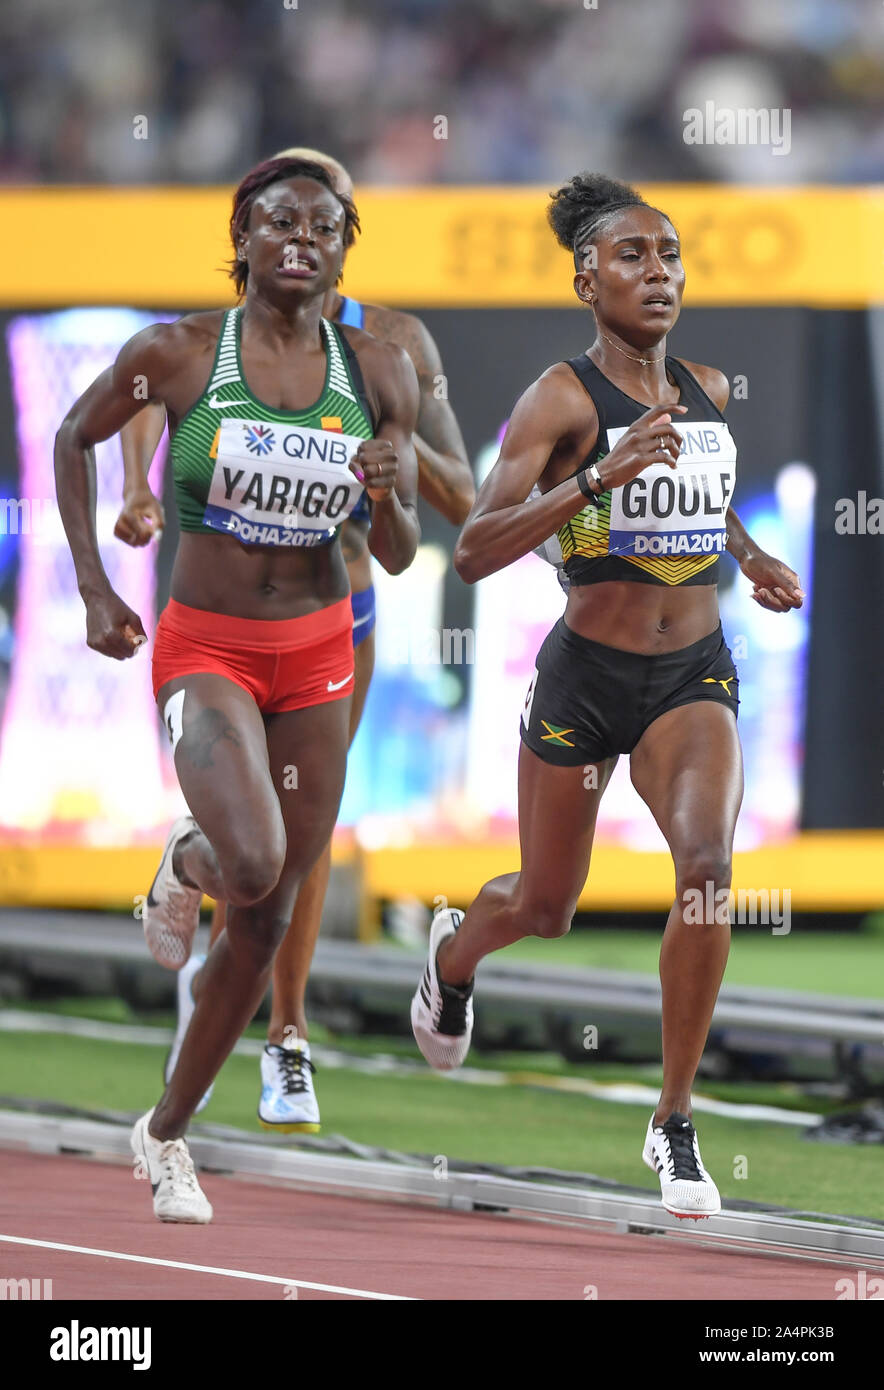 Natoya Goule (Jamaica), Noélie Yarigo (Benin). 800 Metres Women, heats. IAAF World Athletics Championships, Doha 2019 Stock Photo